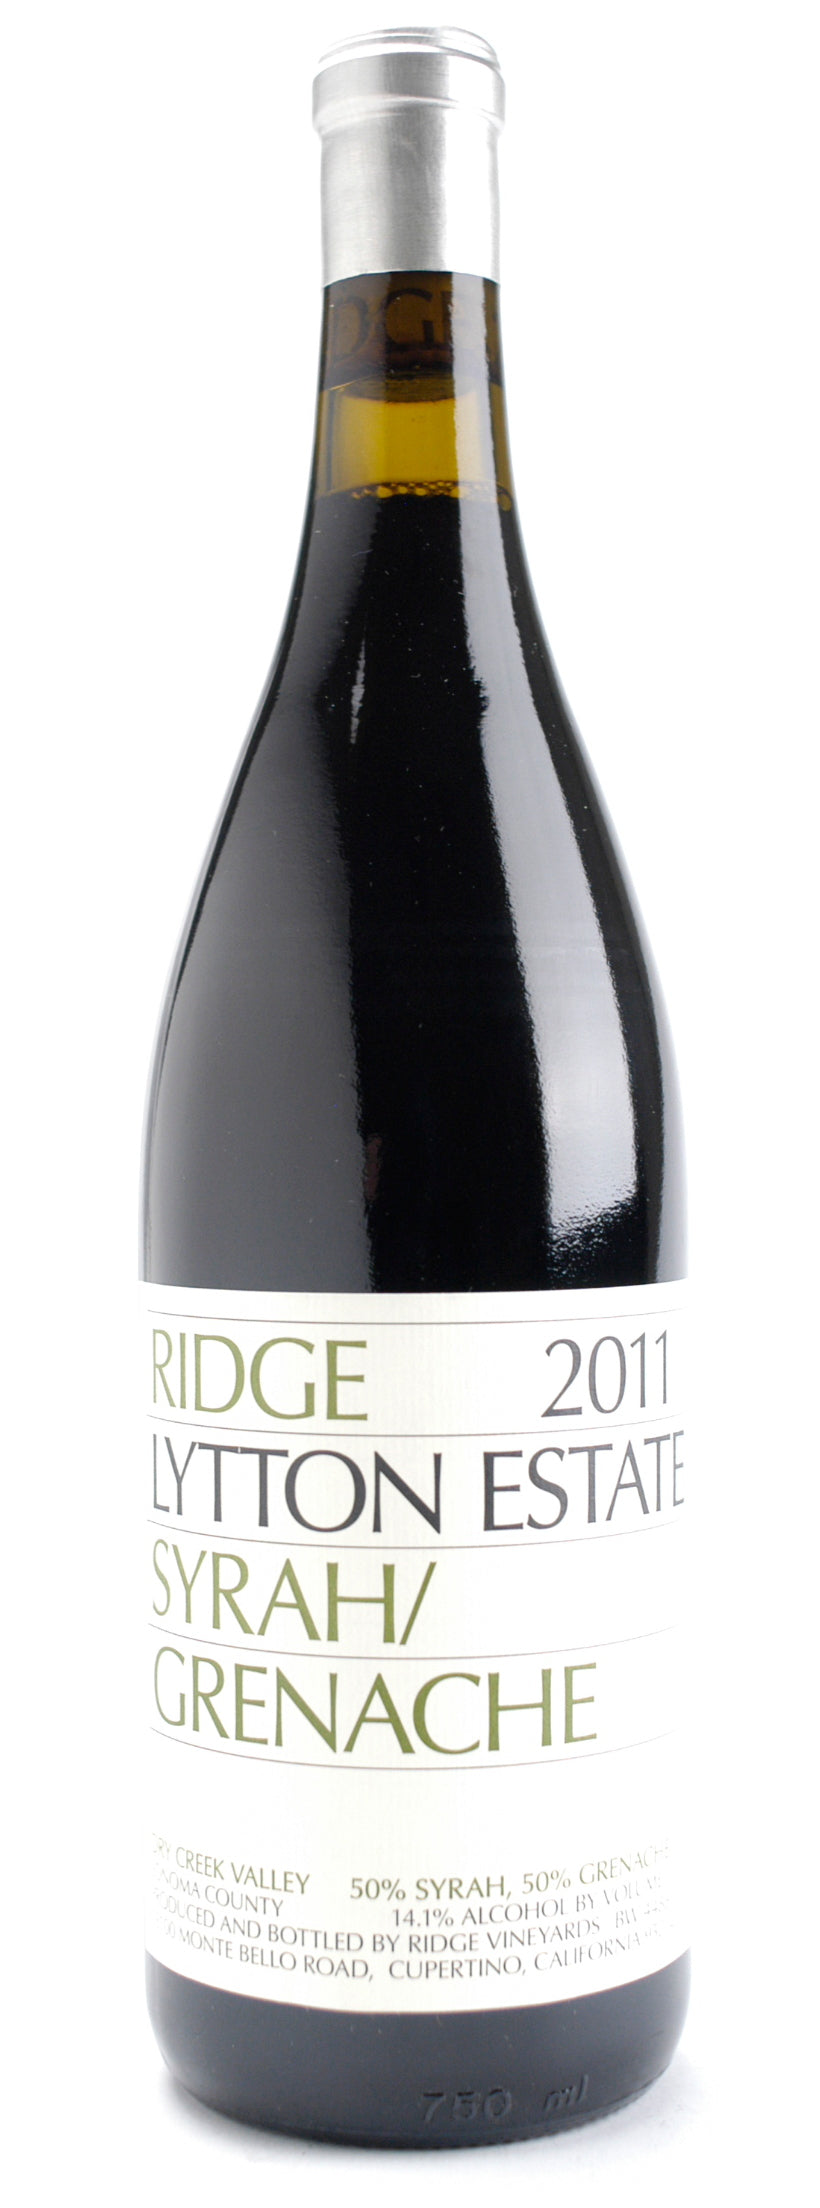 2011 Ridge Syrah/Grenache Lytton Estate, 750ml